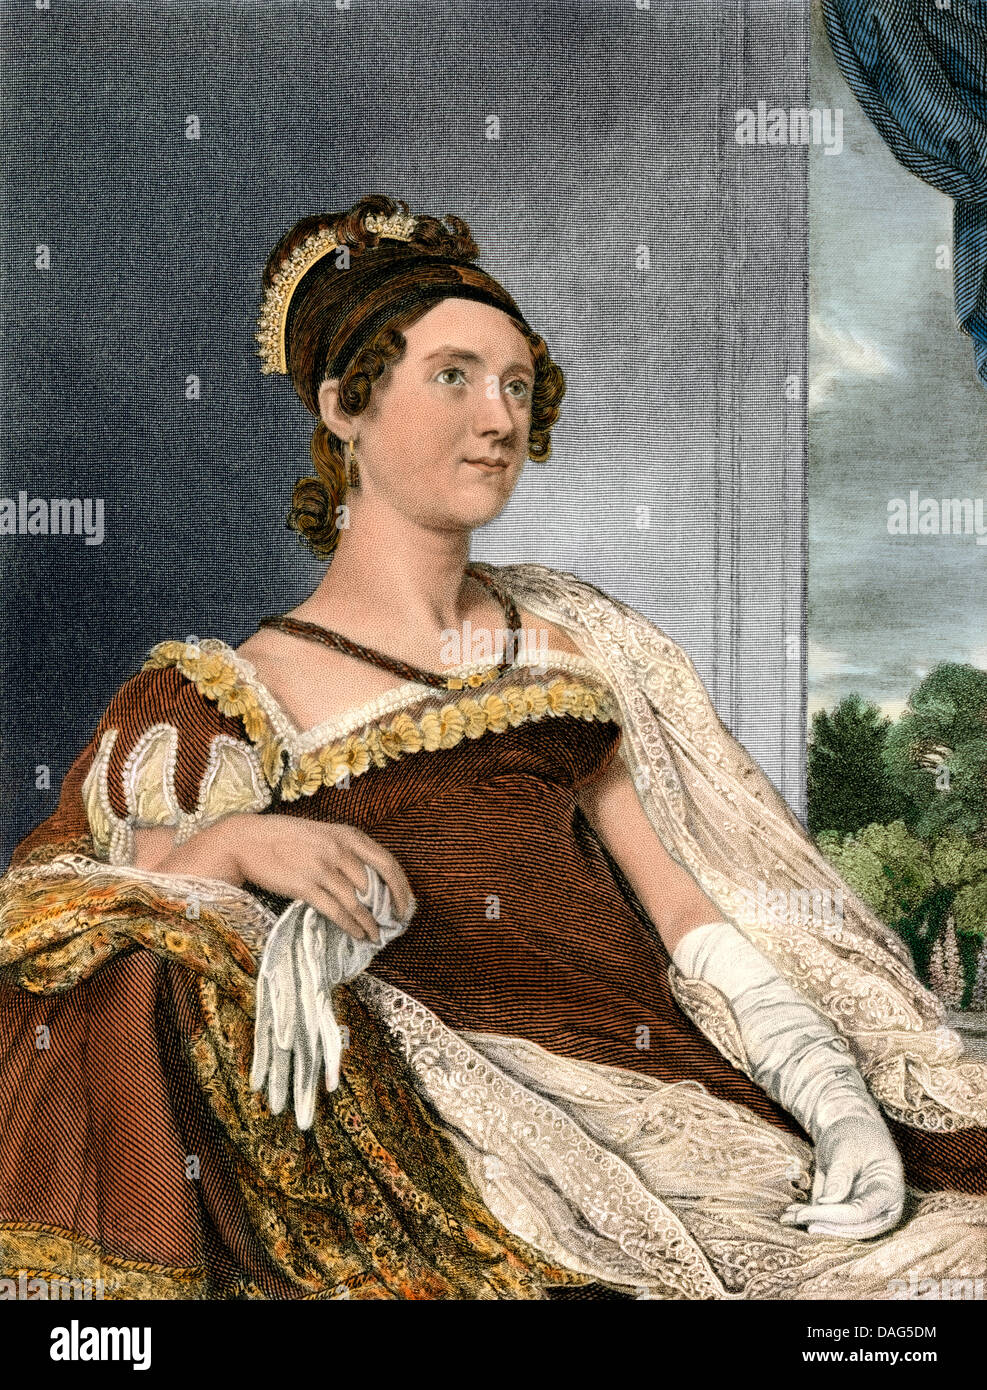 Portrait von First Lady Louisa Catherine Adams, Ehefrau von John Quincy Adams, Anfang 1800. Digital farbige Gravur Stockfoto